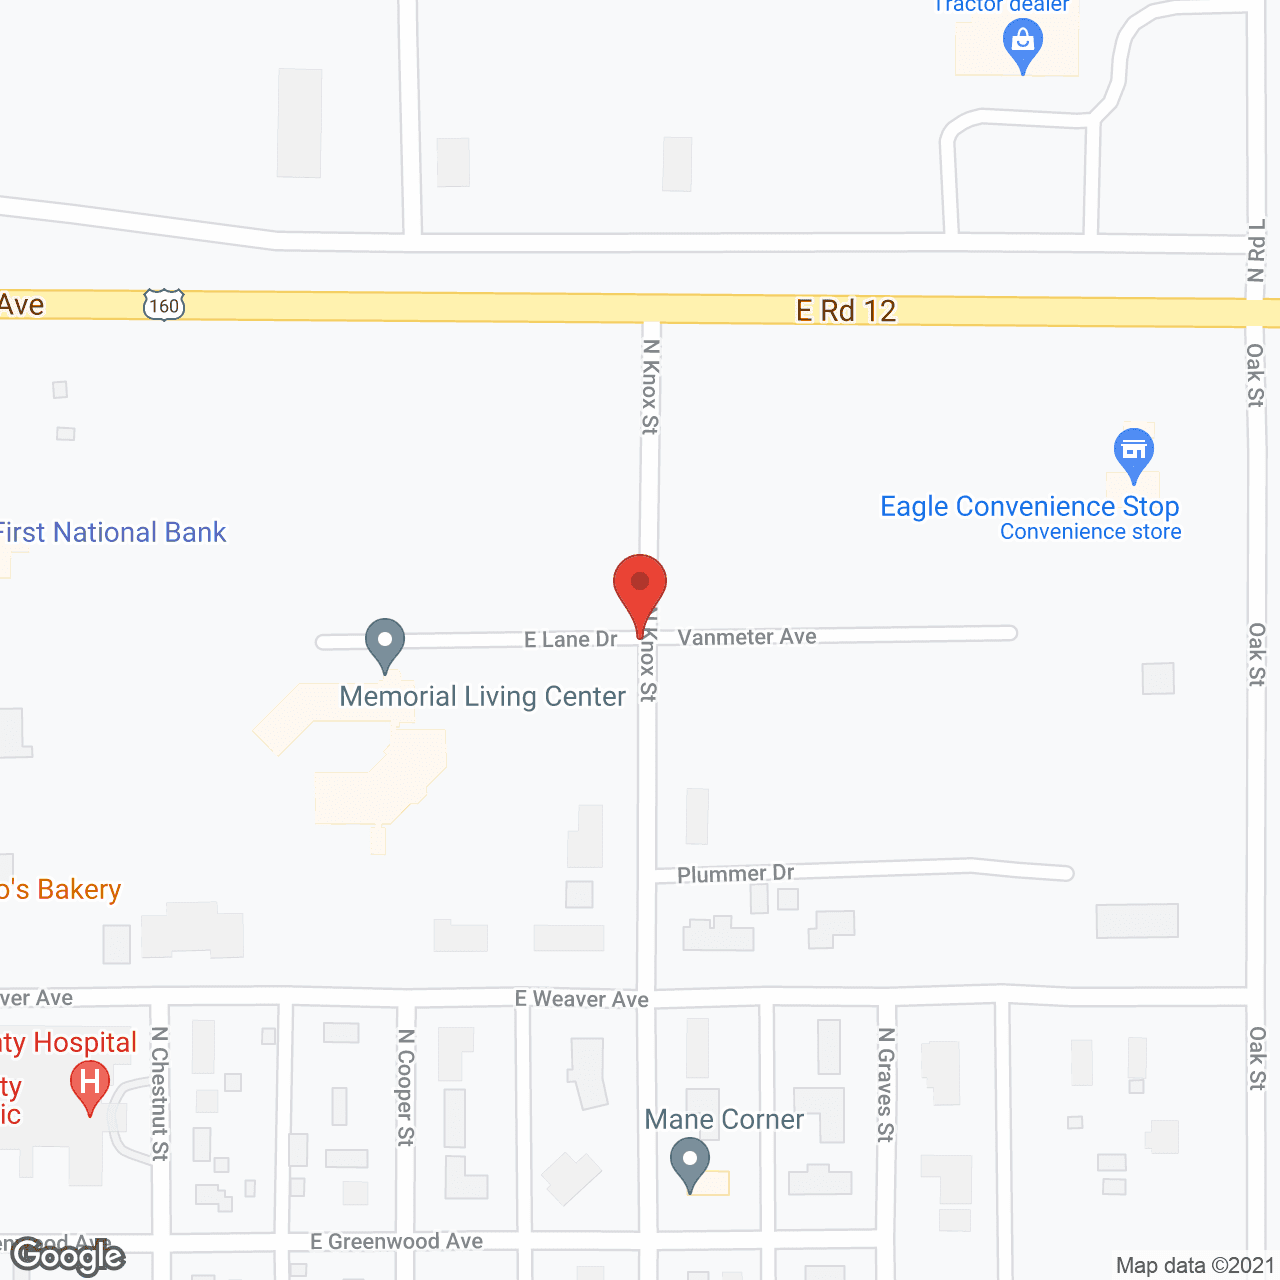 Memorial Living Center in google map